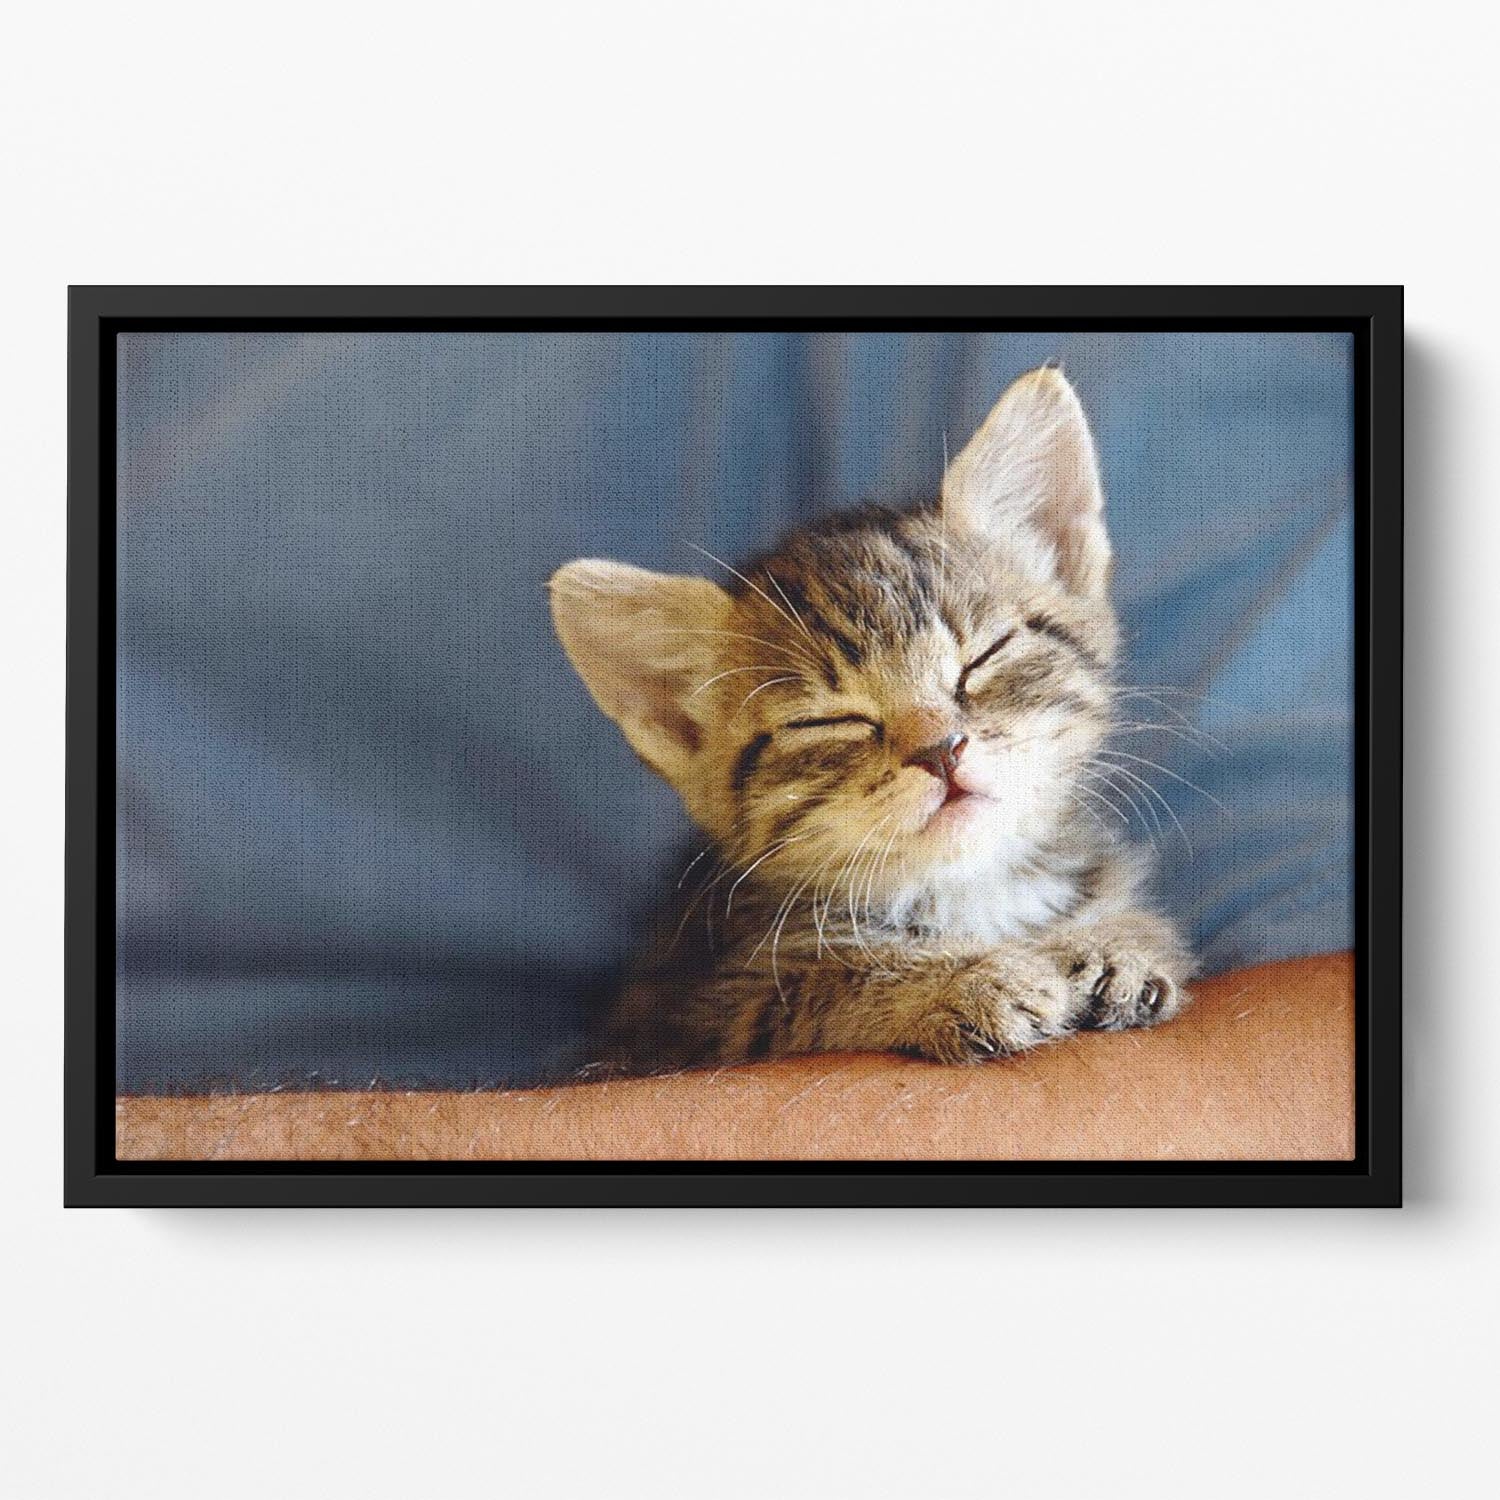 Little cat sleeping on human hand closeup Floating Framed Canvas - Canvas Art Rocks - 2